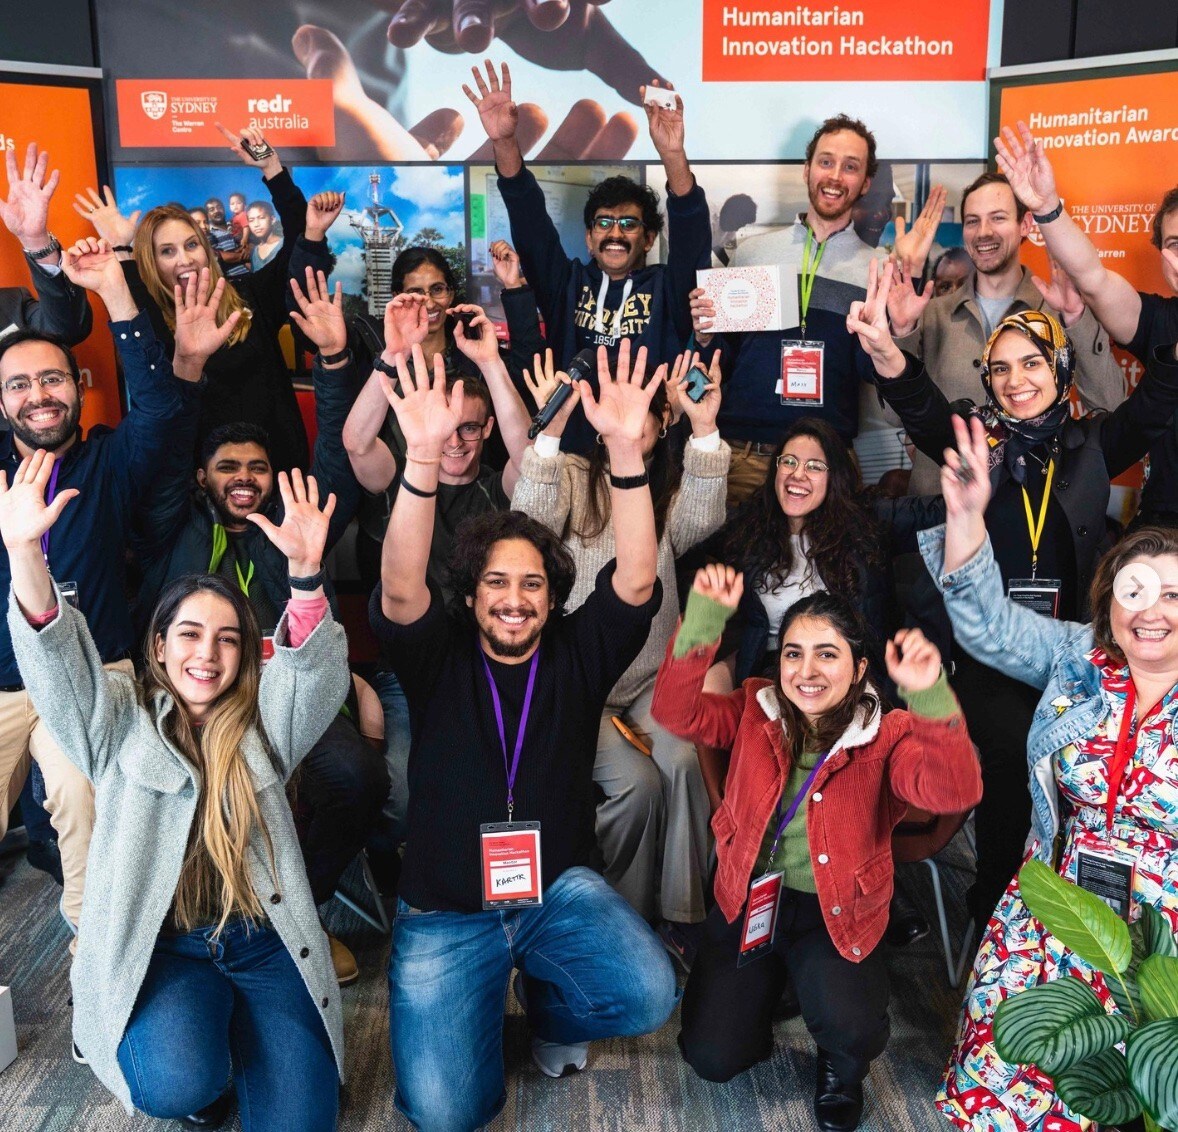 Humanitarian Innovation Hackathon for 2022 winner, Team Ashaway